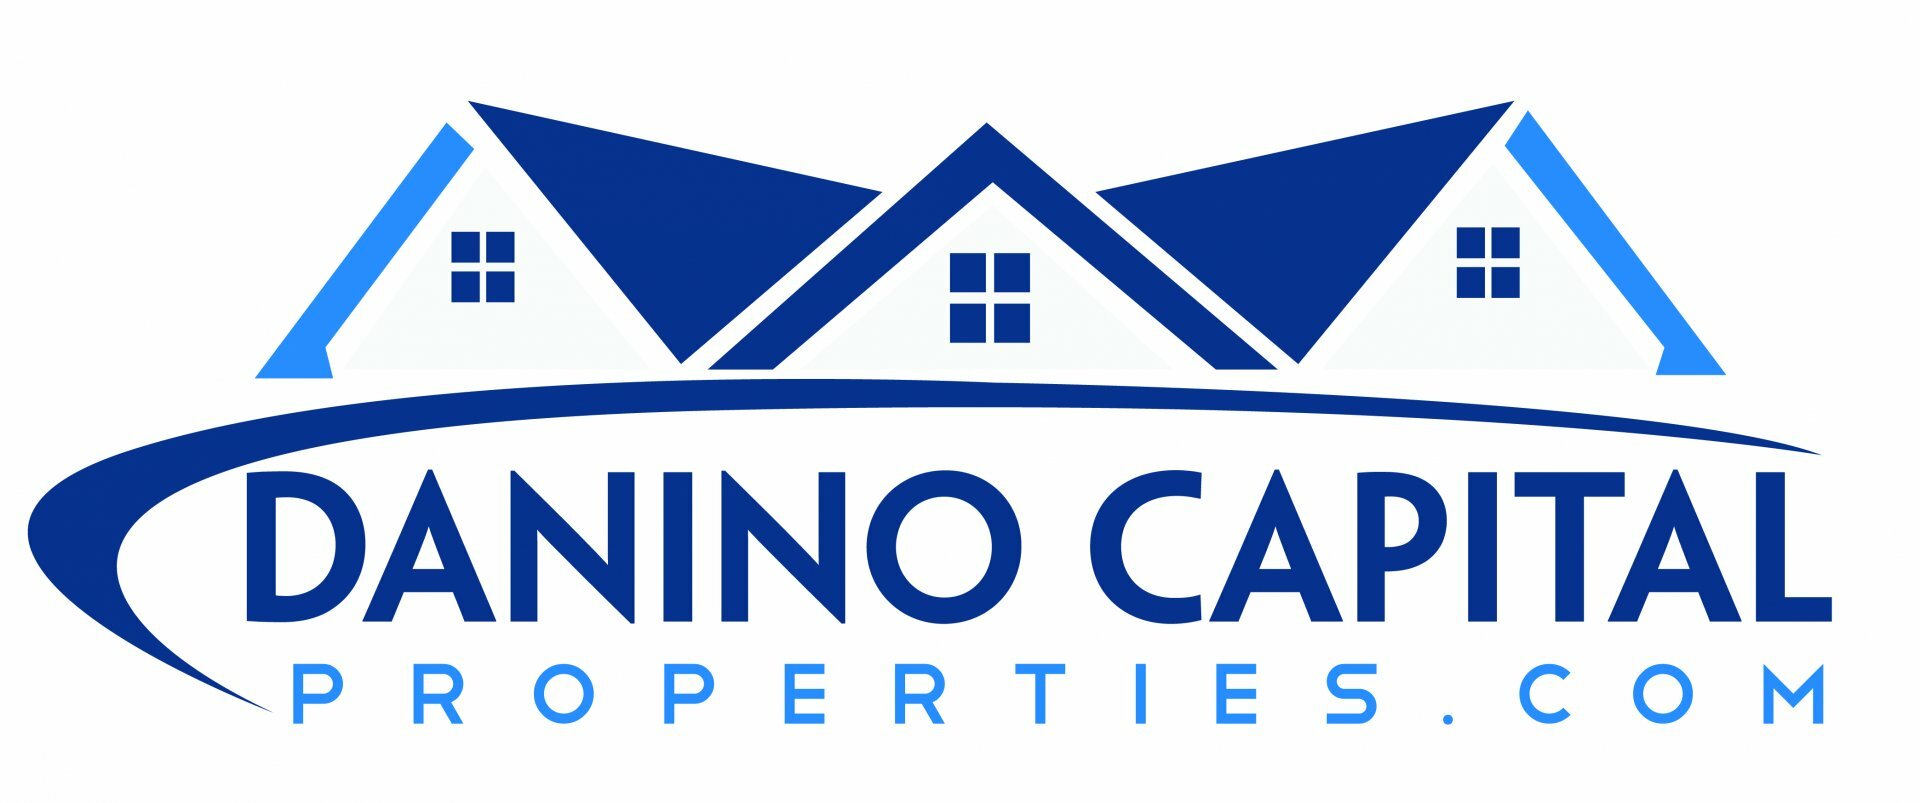 Danino Capital Properties logo